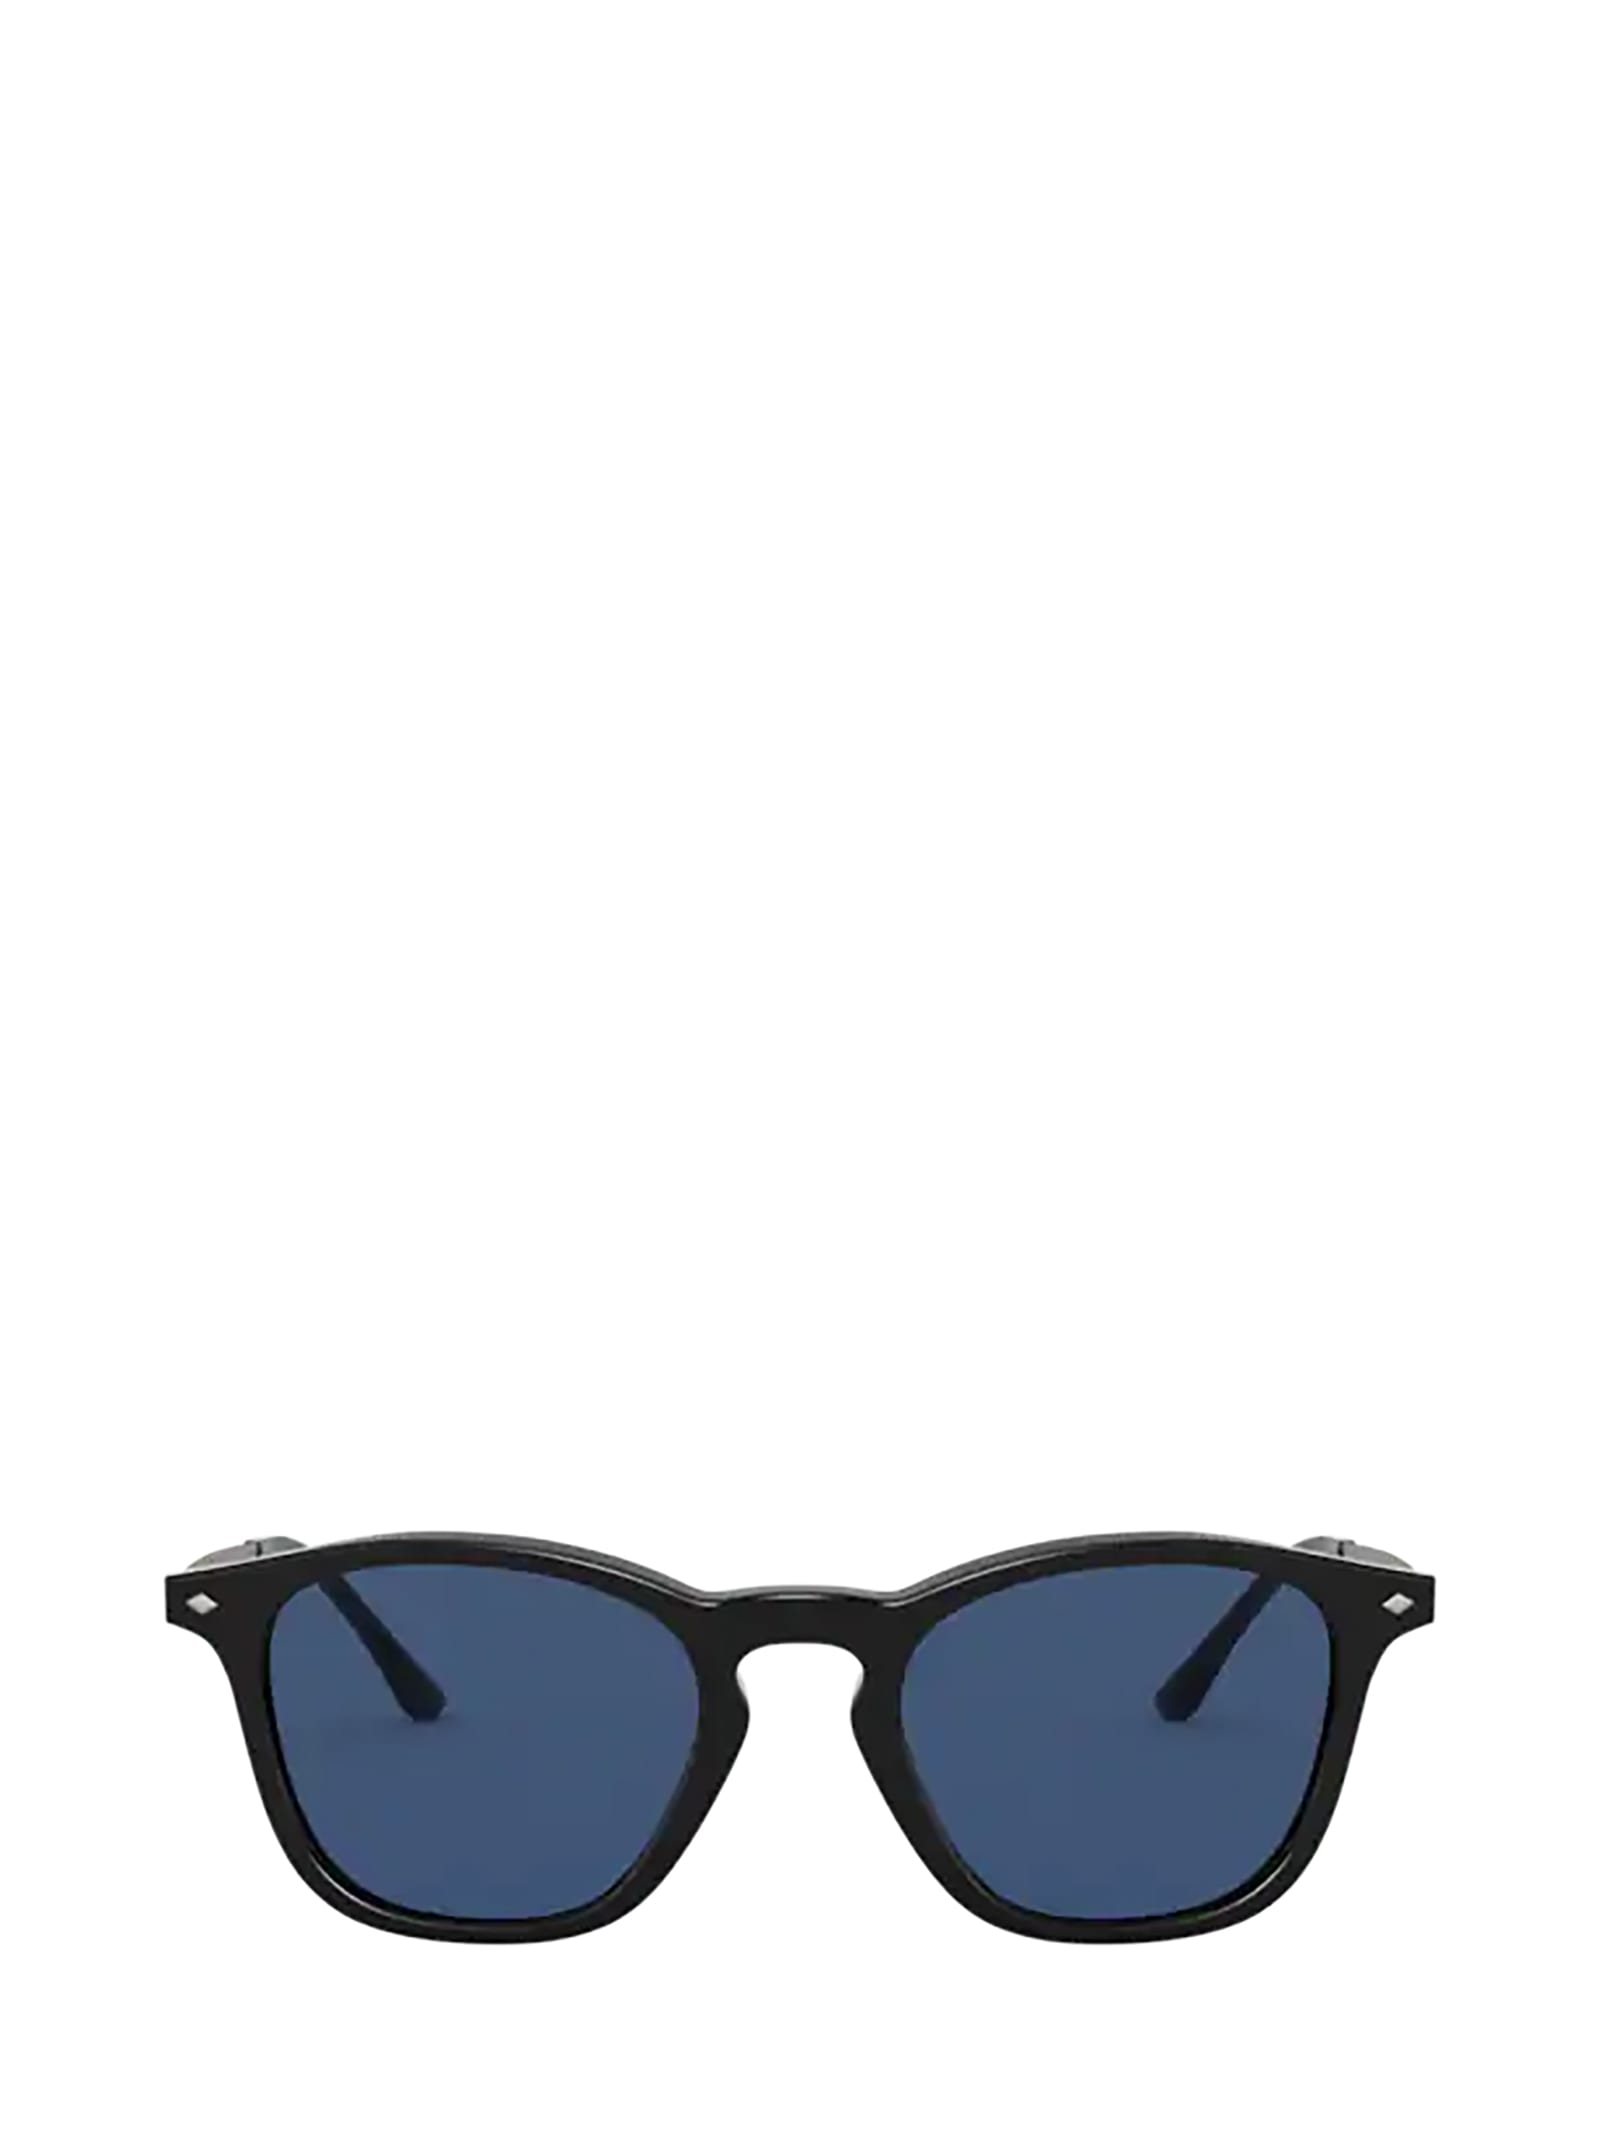 Giorgio Armani Giorgio Armani Ar8128 Black Sunglasses